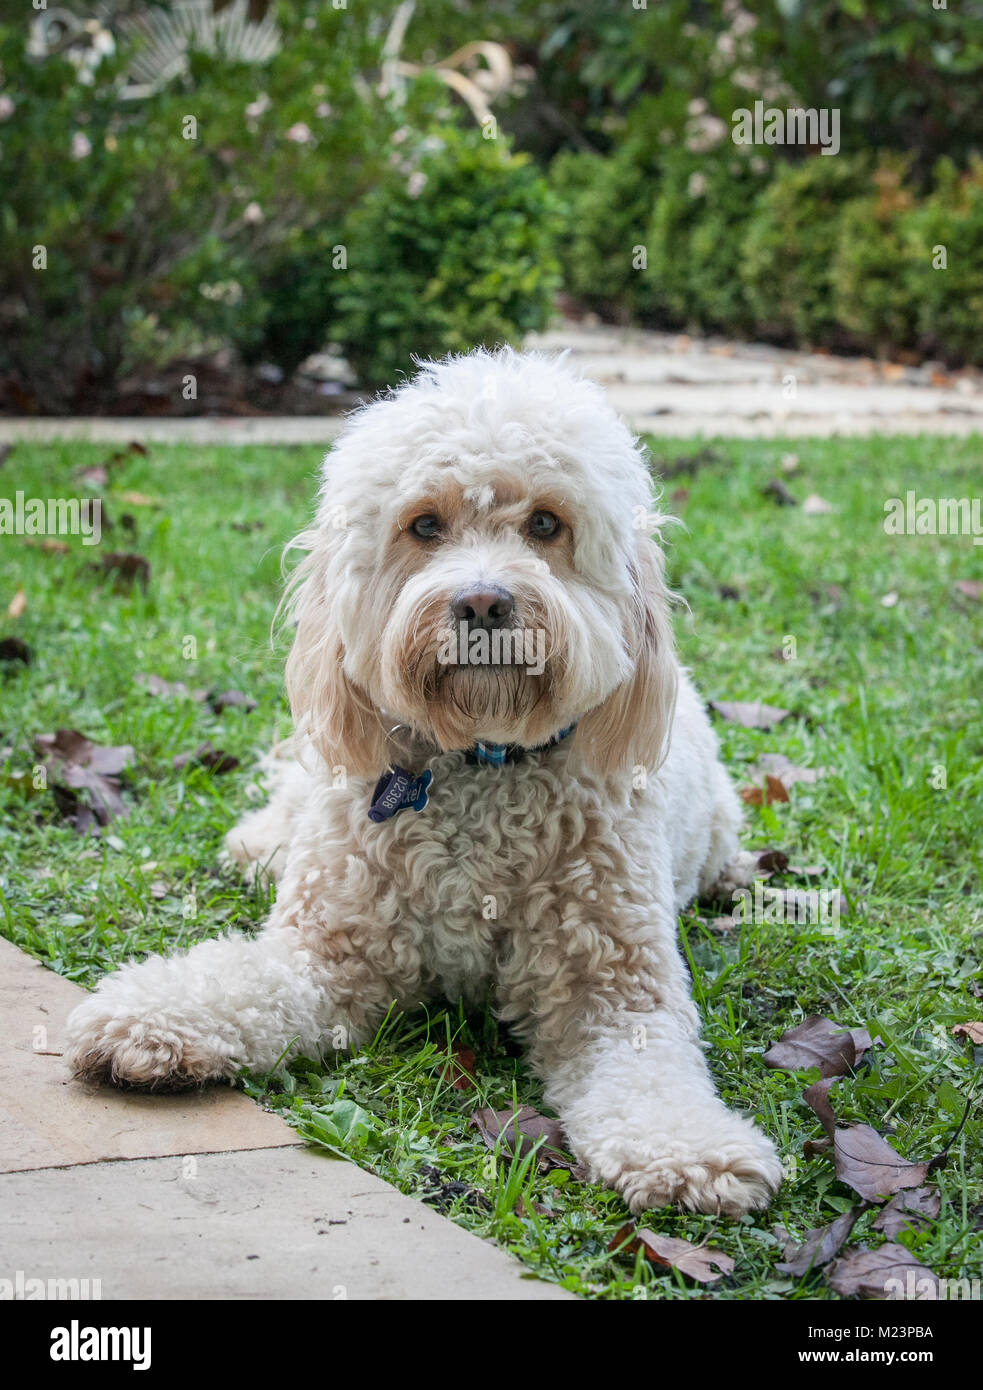 Spoodle puppy Stock Photo - Alamy